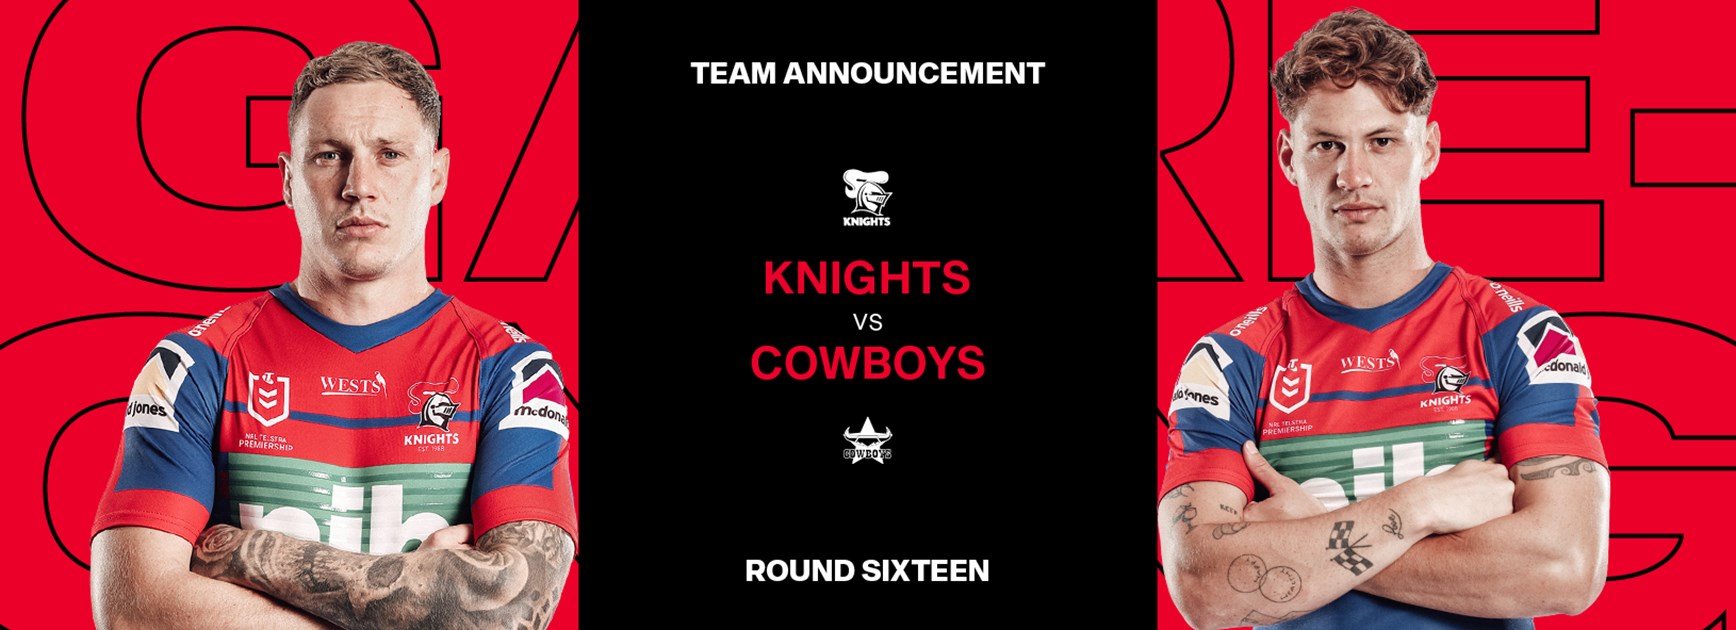 Knights v Cowboys Round 16 NRL team list